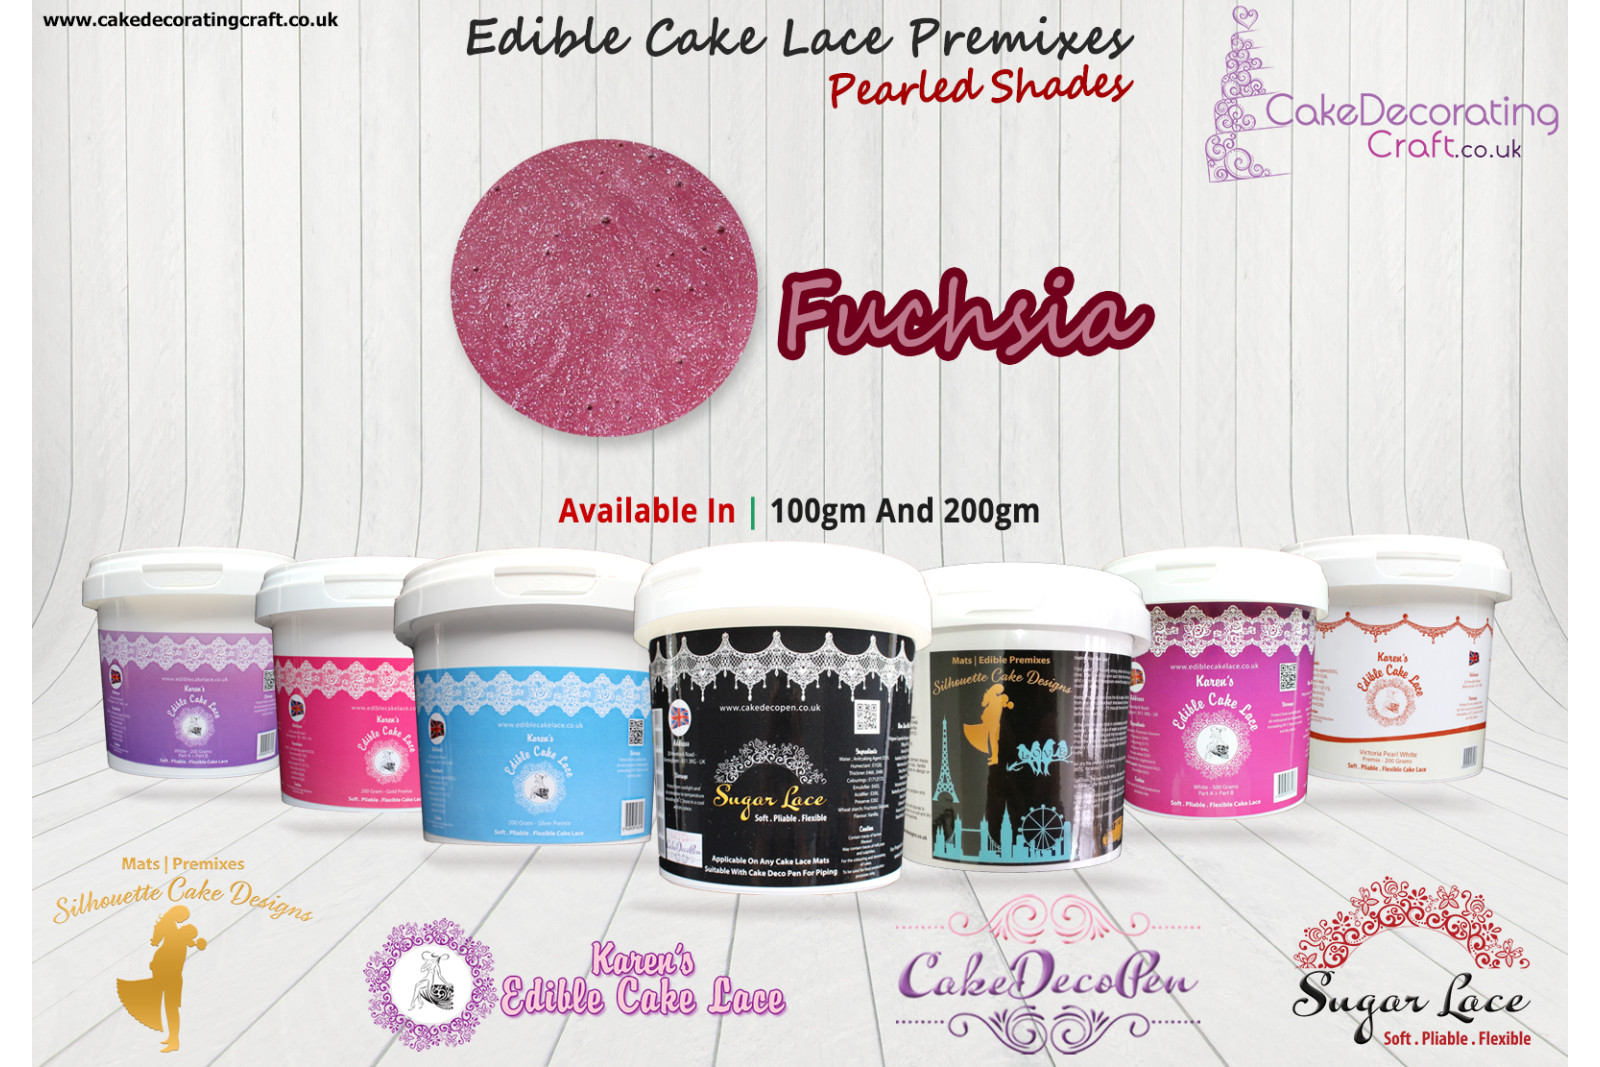 Fuchsia | Edible Cake Lace Premixes | Pearled Shade | 200 Grams